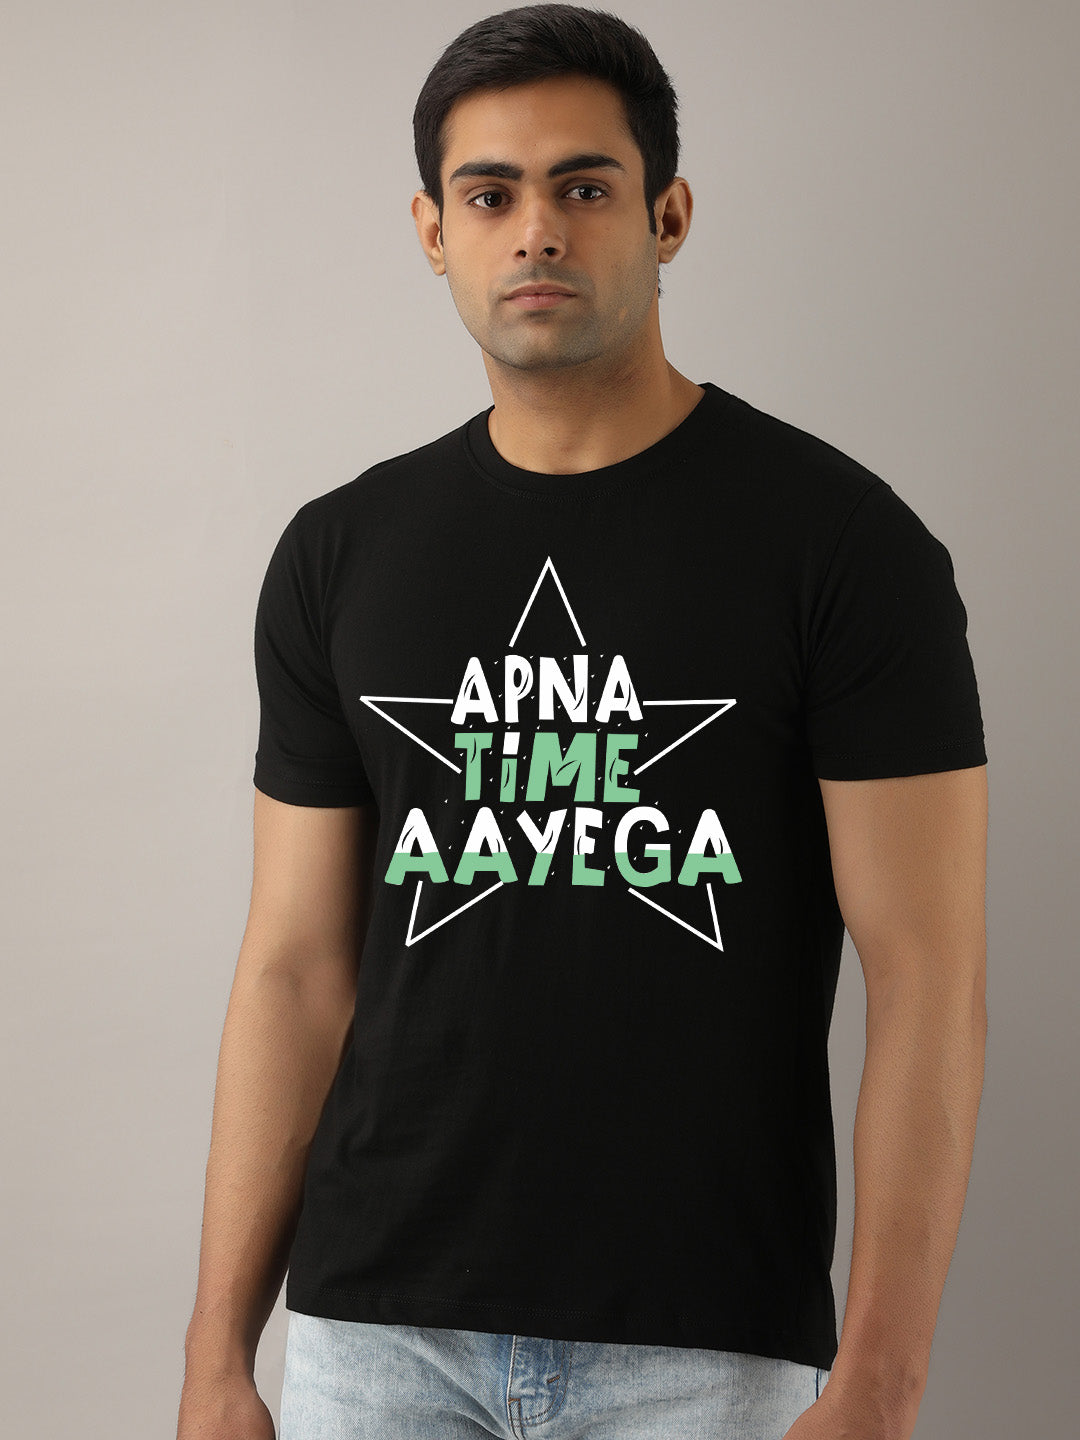 Apna Time Aayega Black T-Shirt